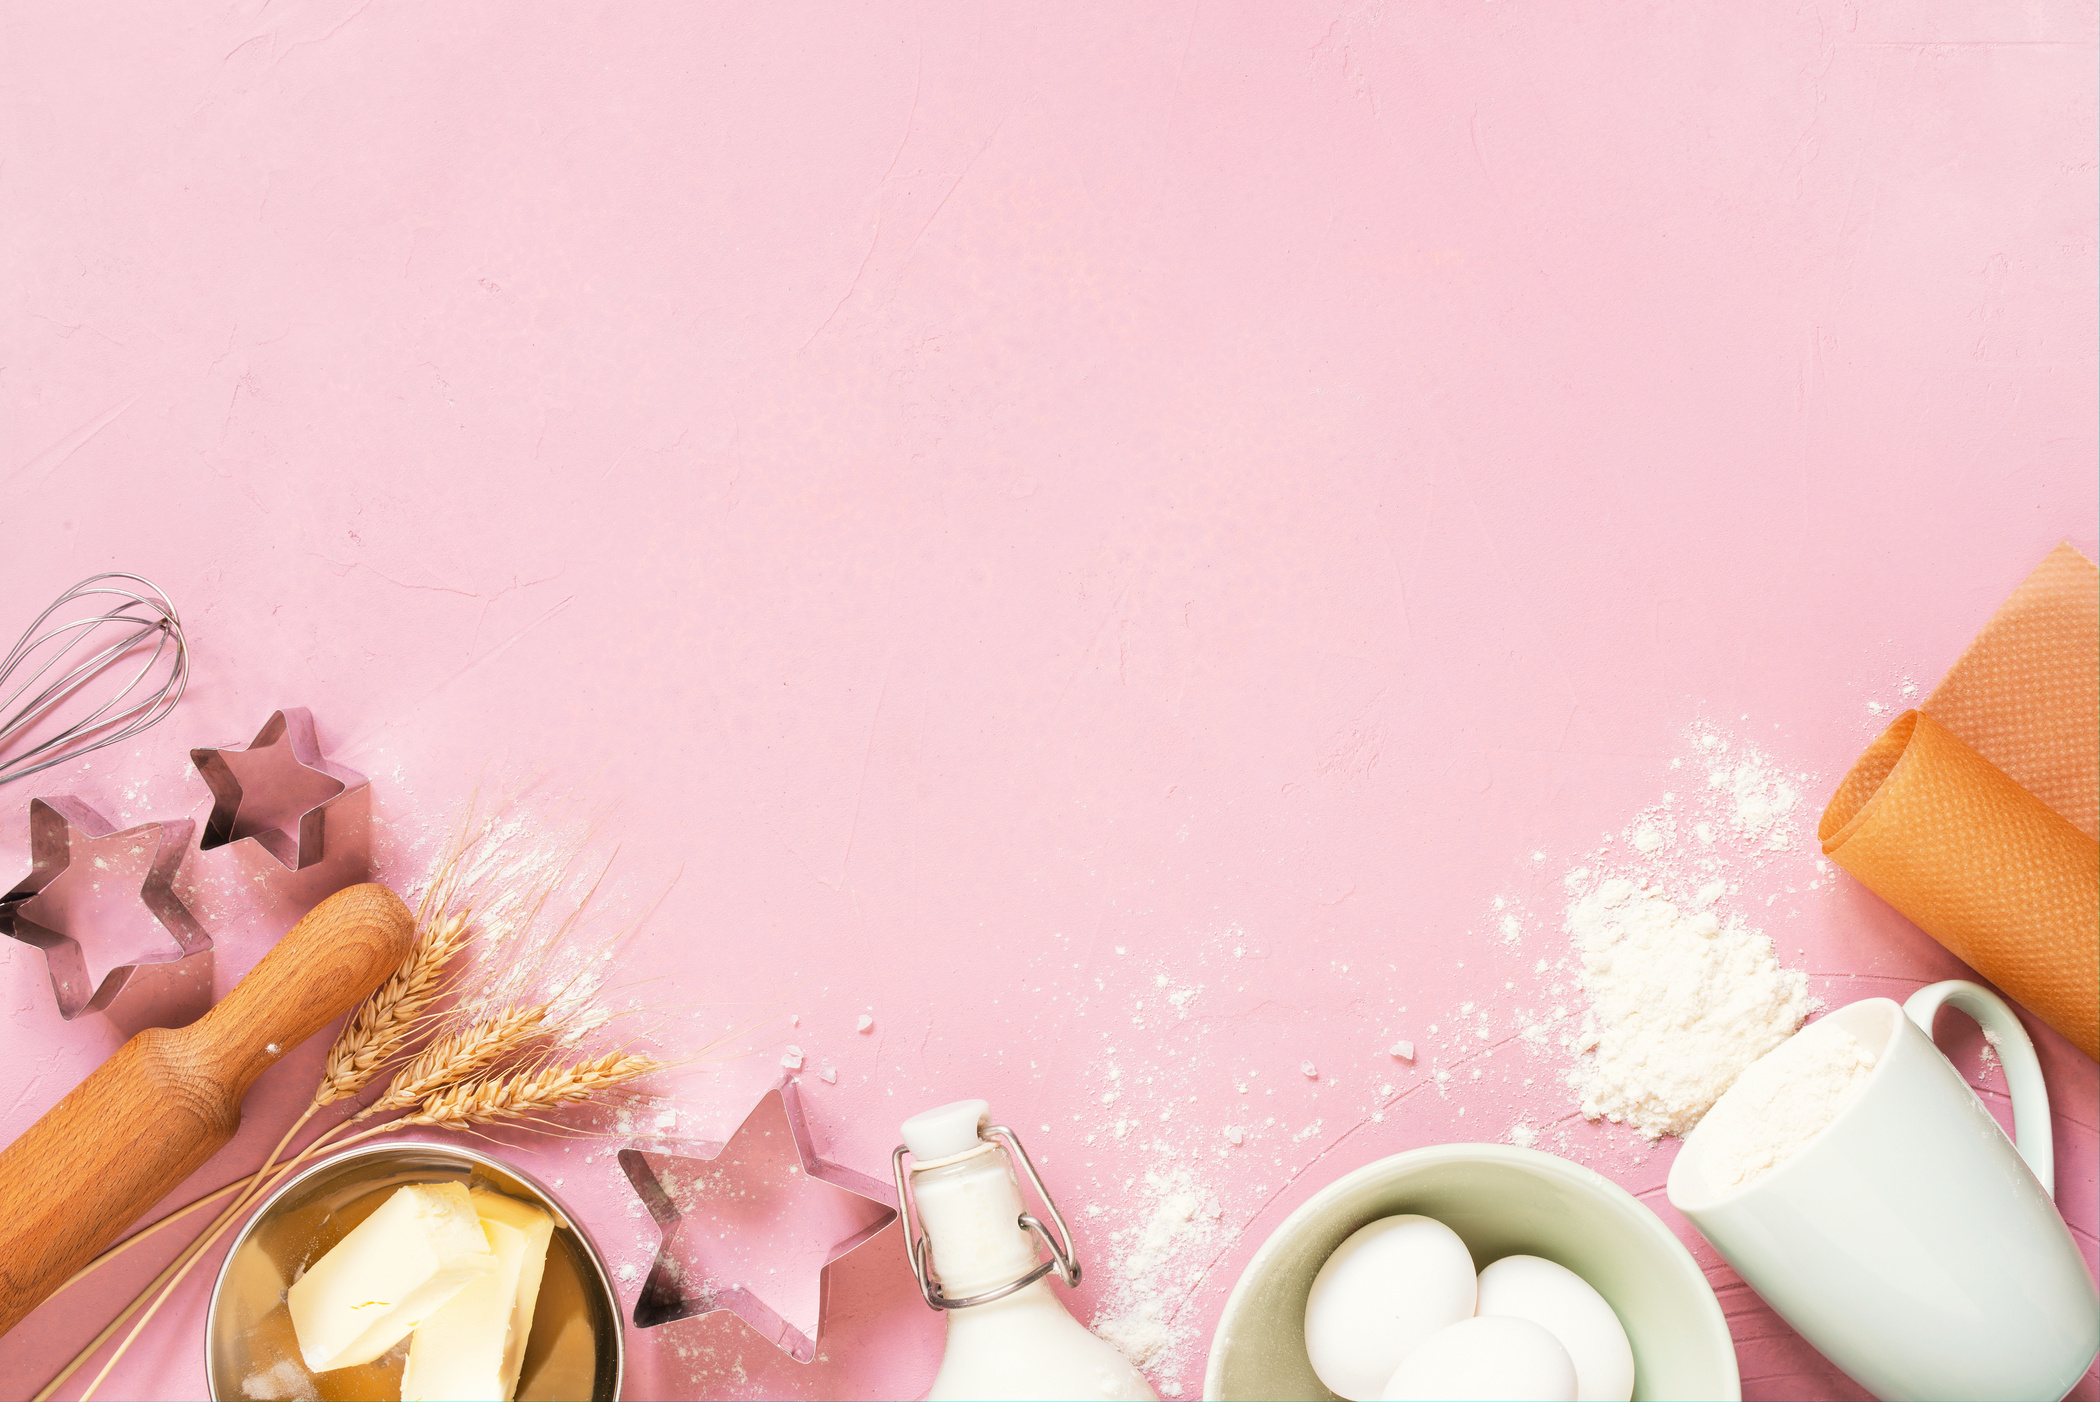 Raw Baking Ingredients on Pink Background